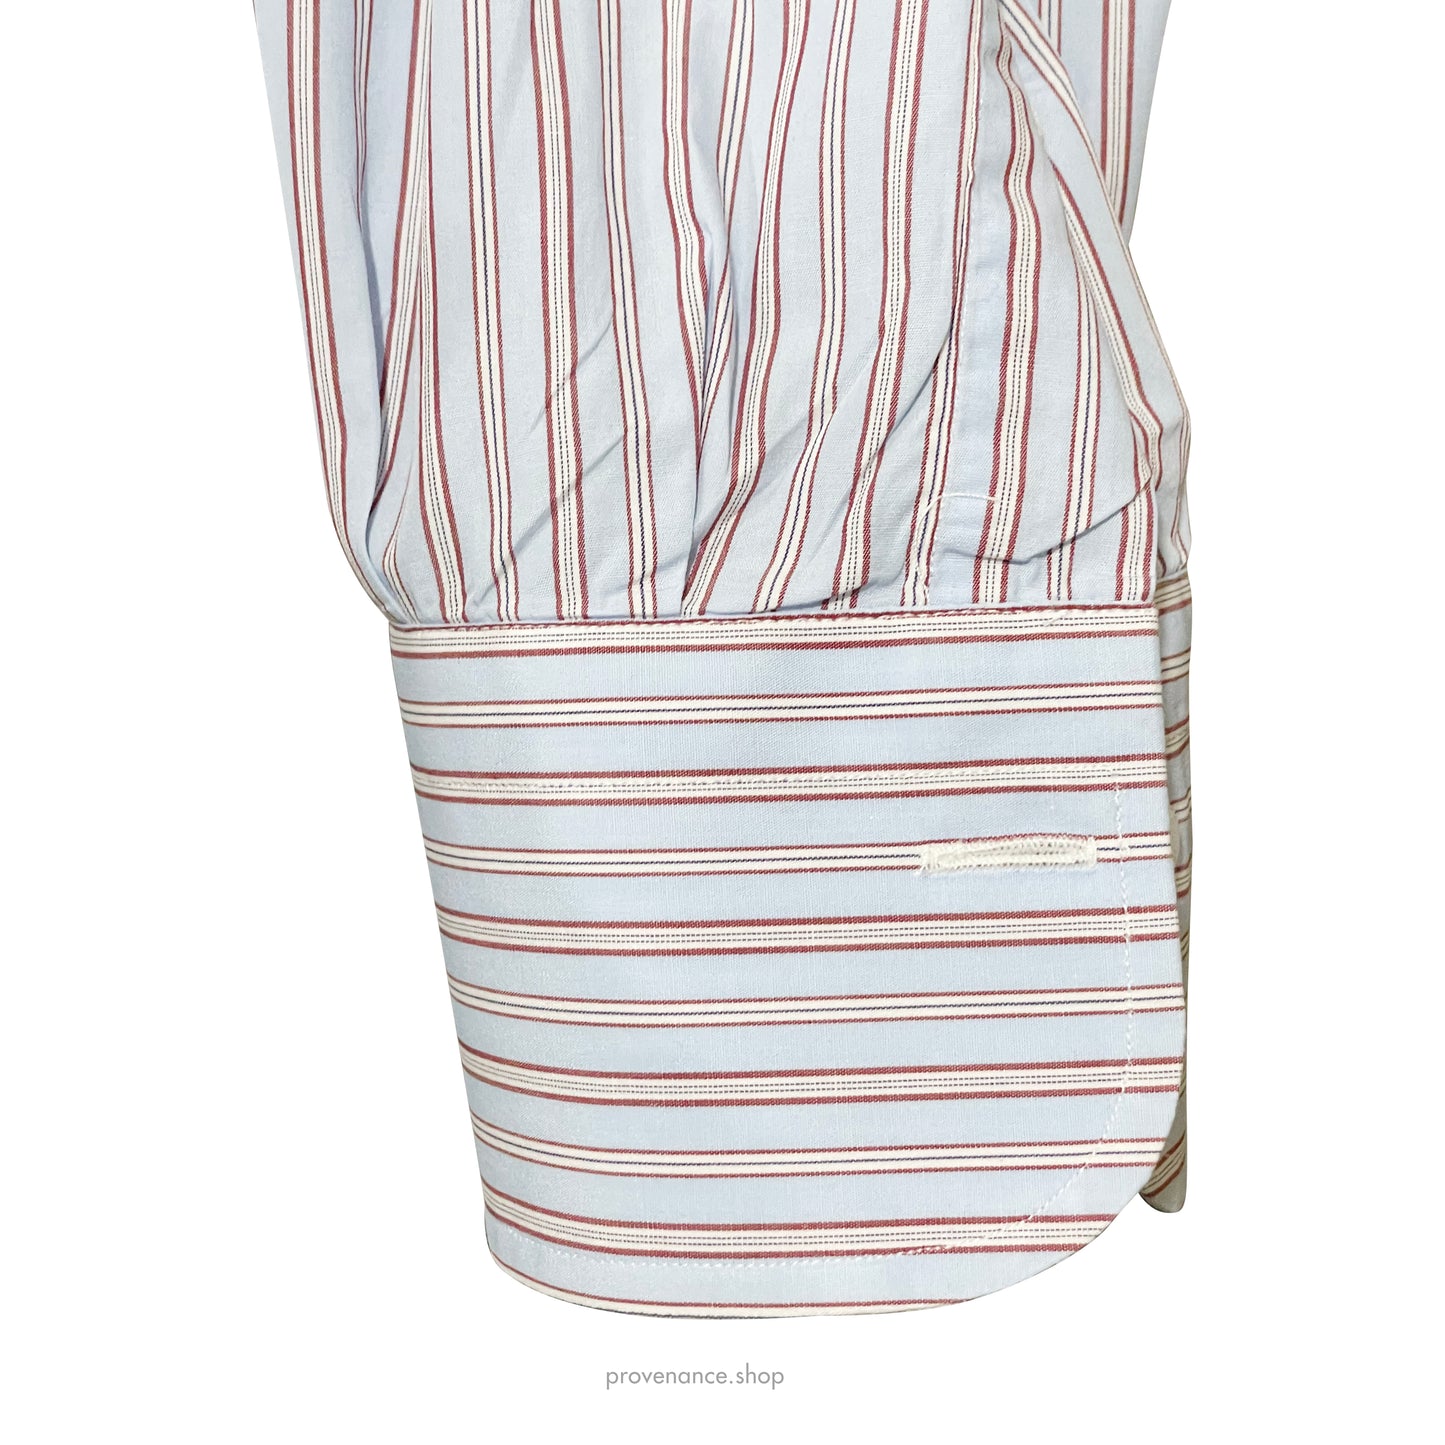 Barba Napoli Cotton Shirt - Striped